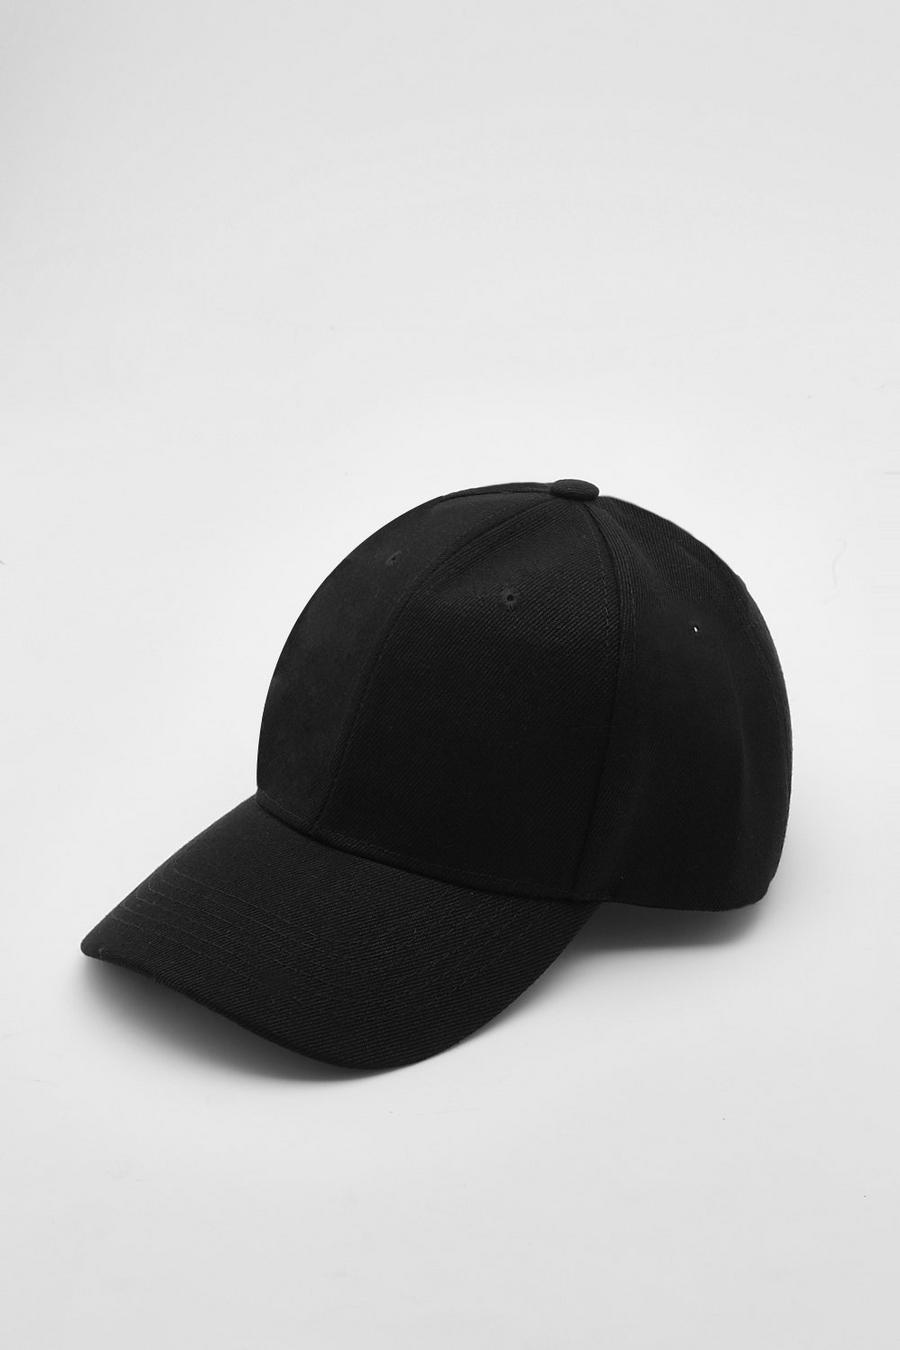 Gorra de béisbol lisa negra, Black nero